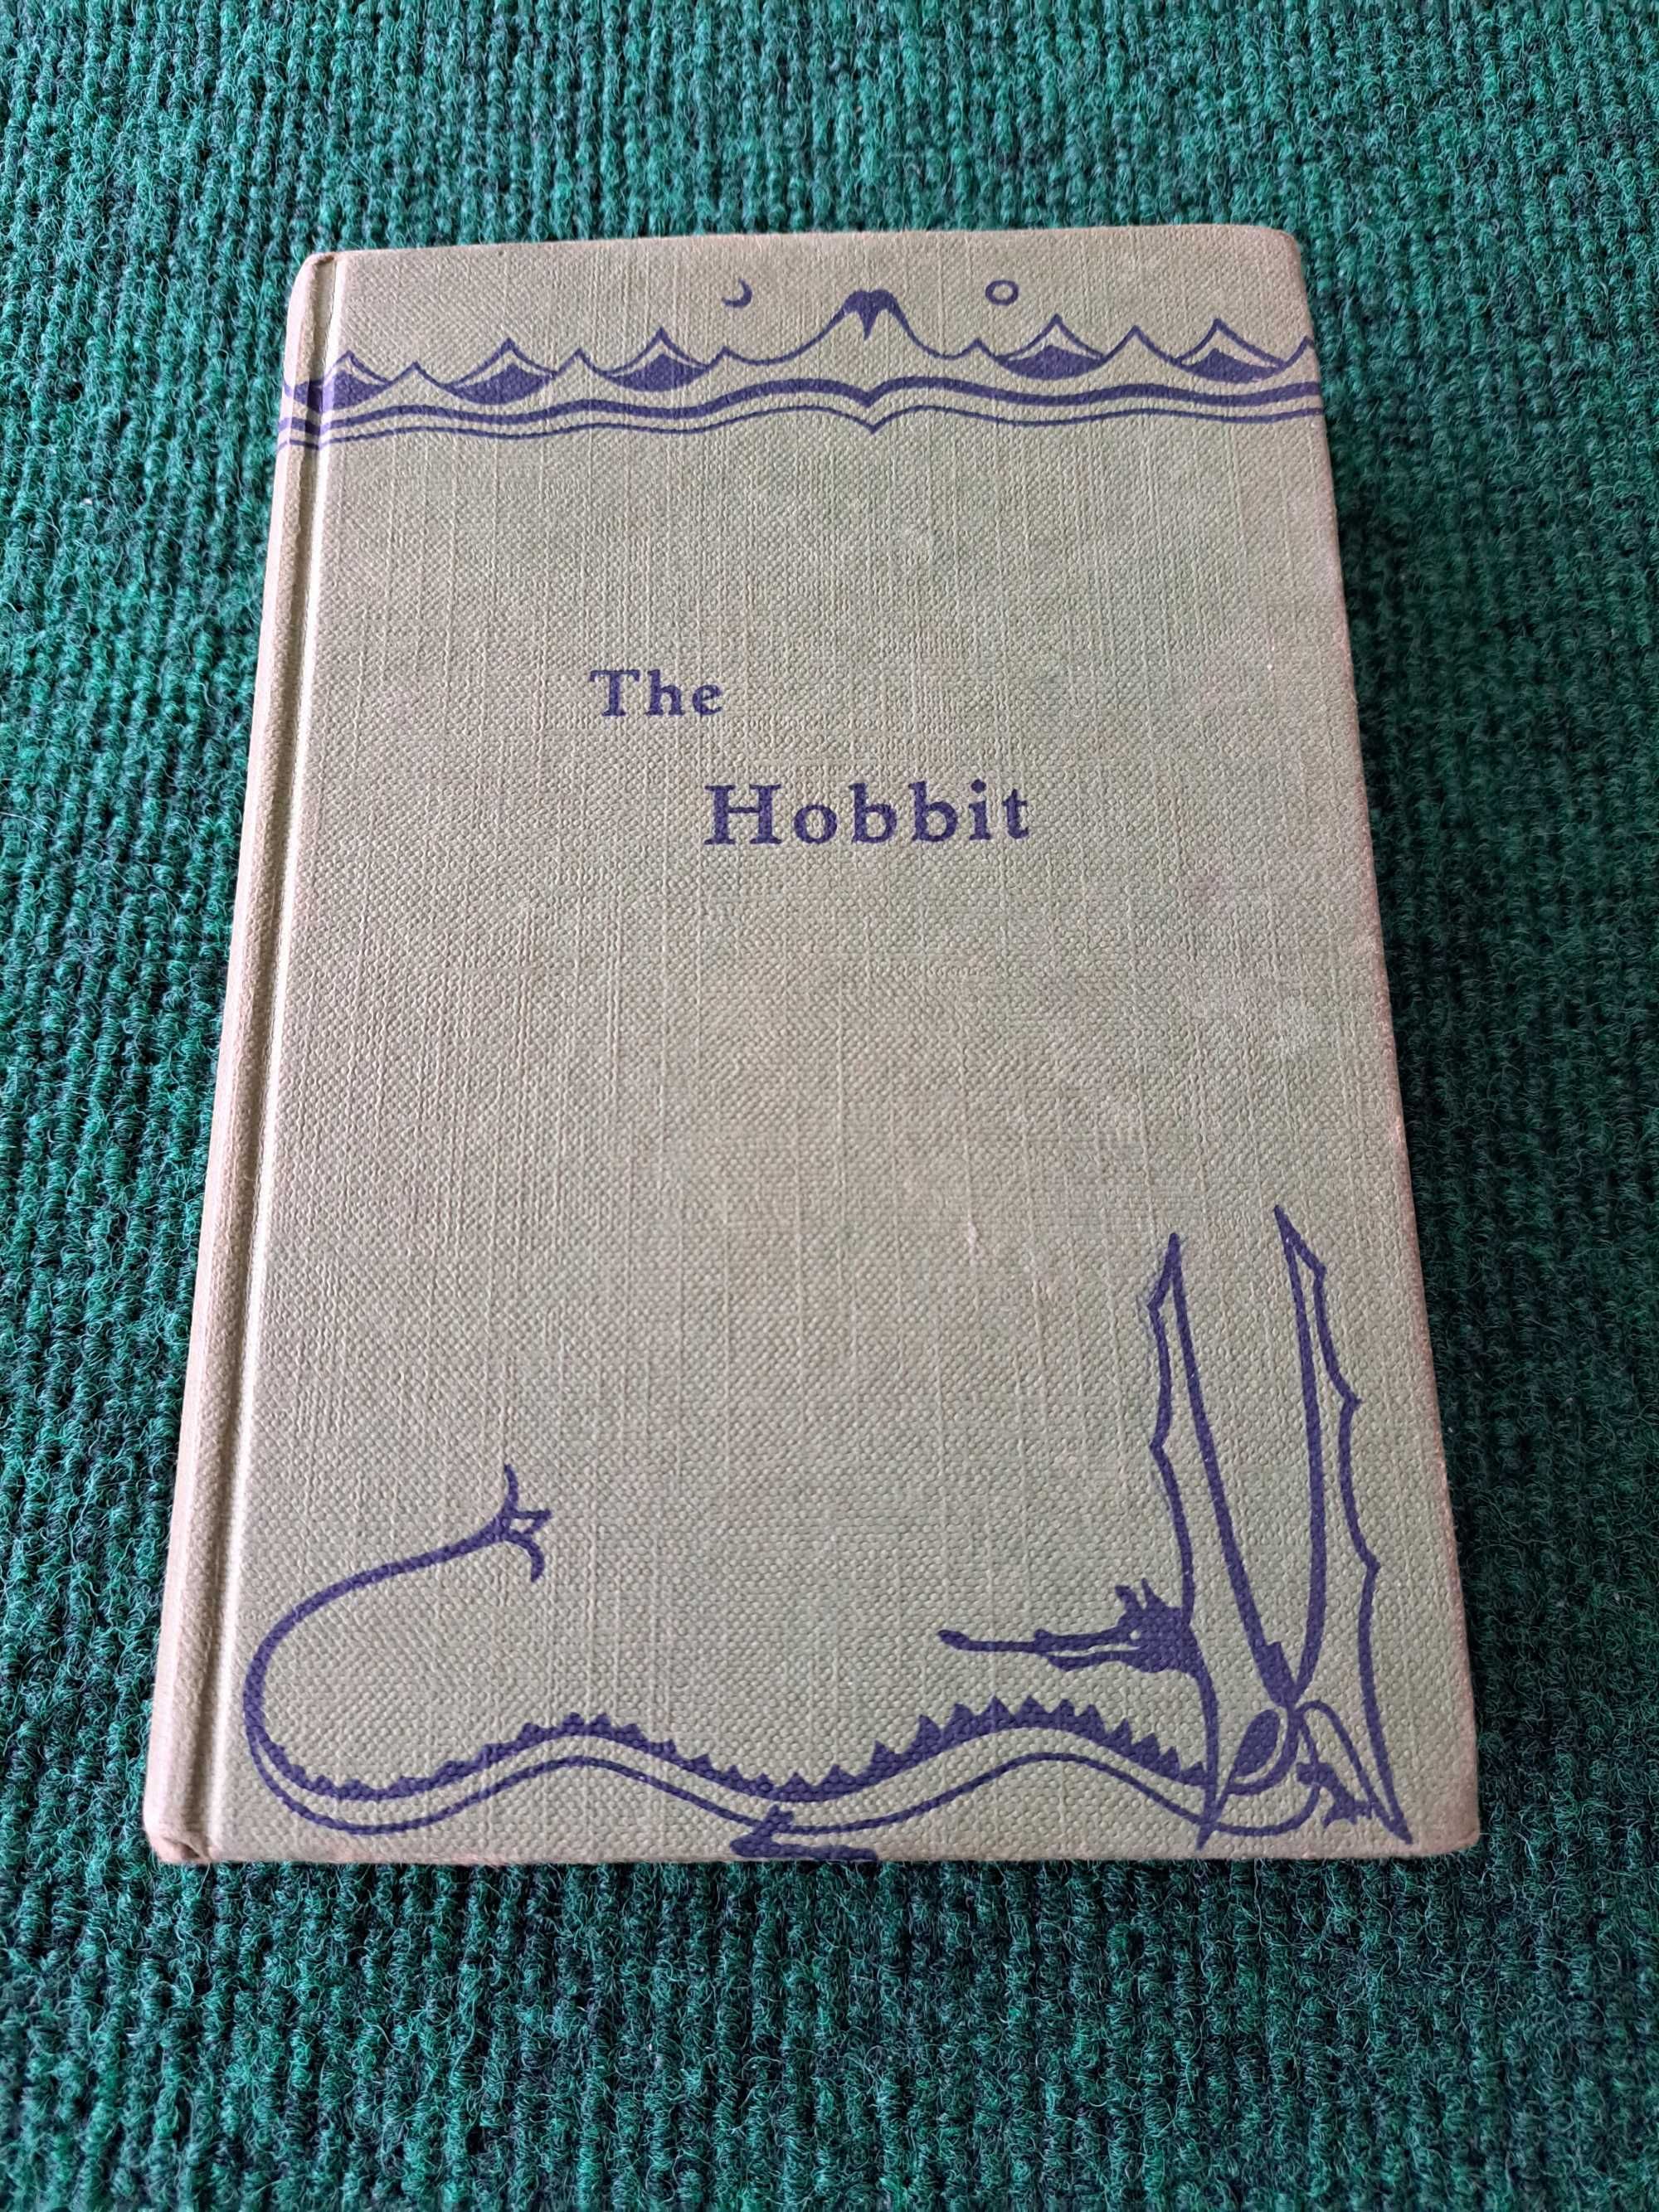 The Hobbit (1968) - JRR Tolkien